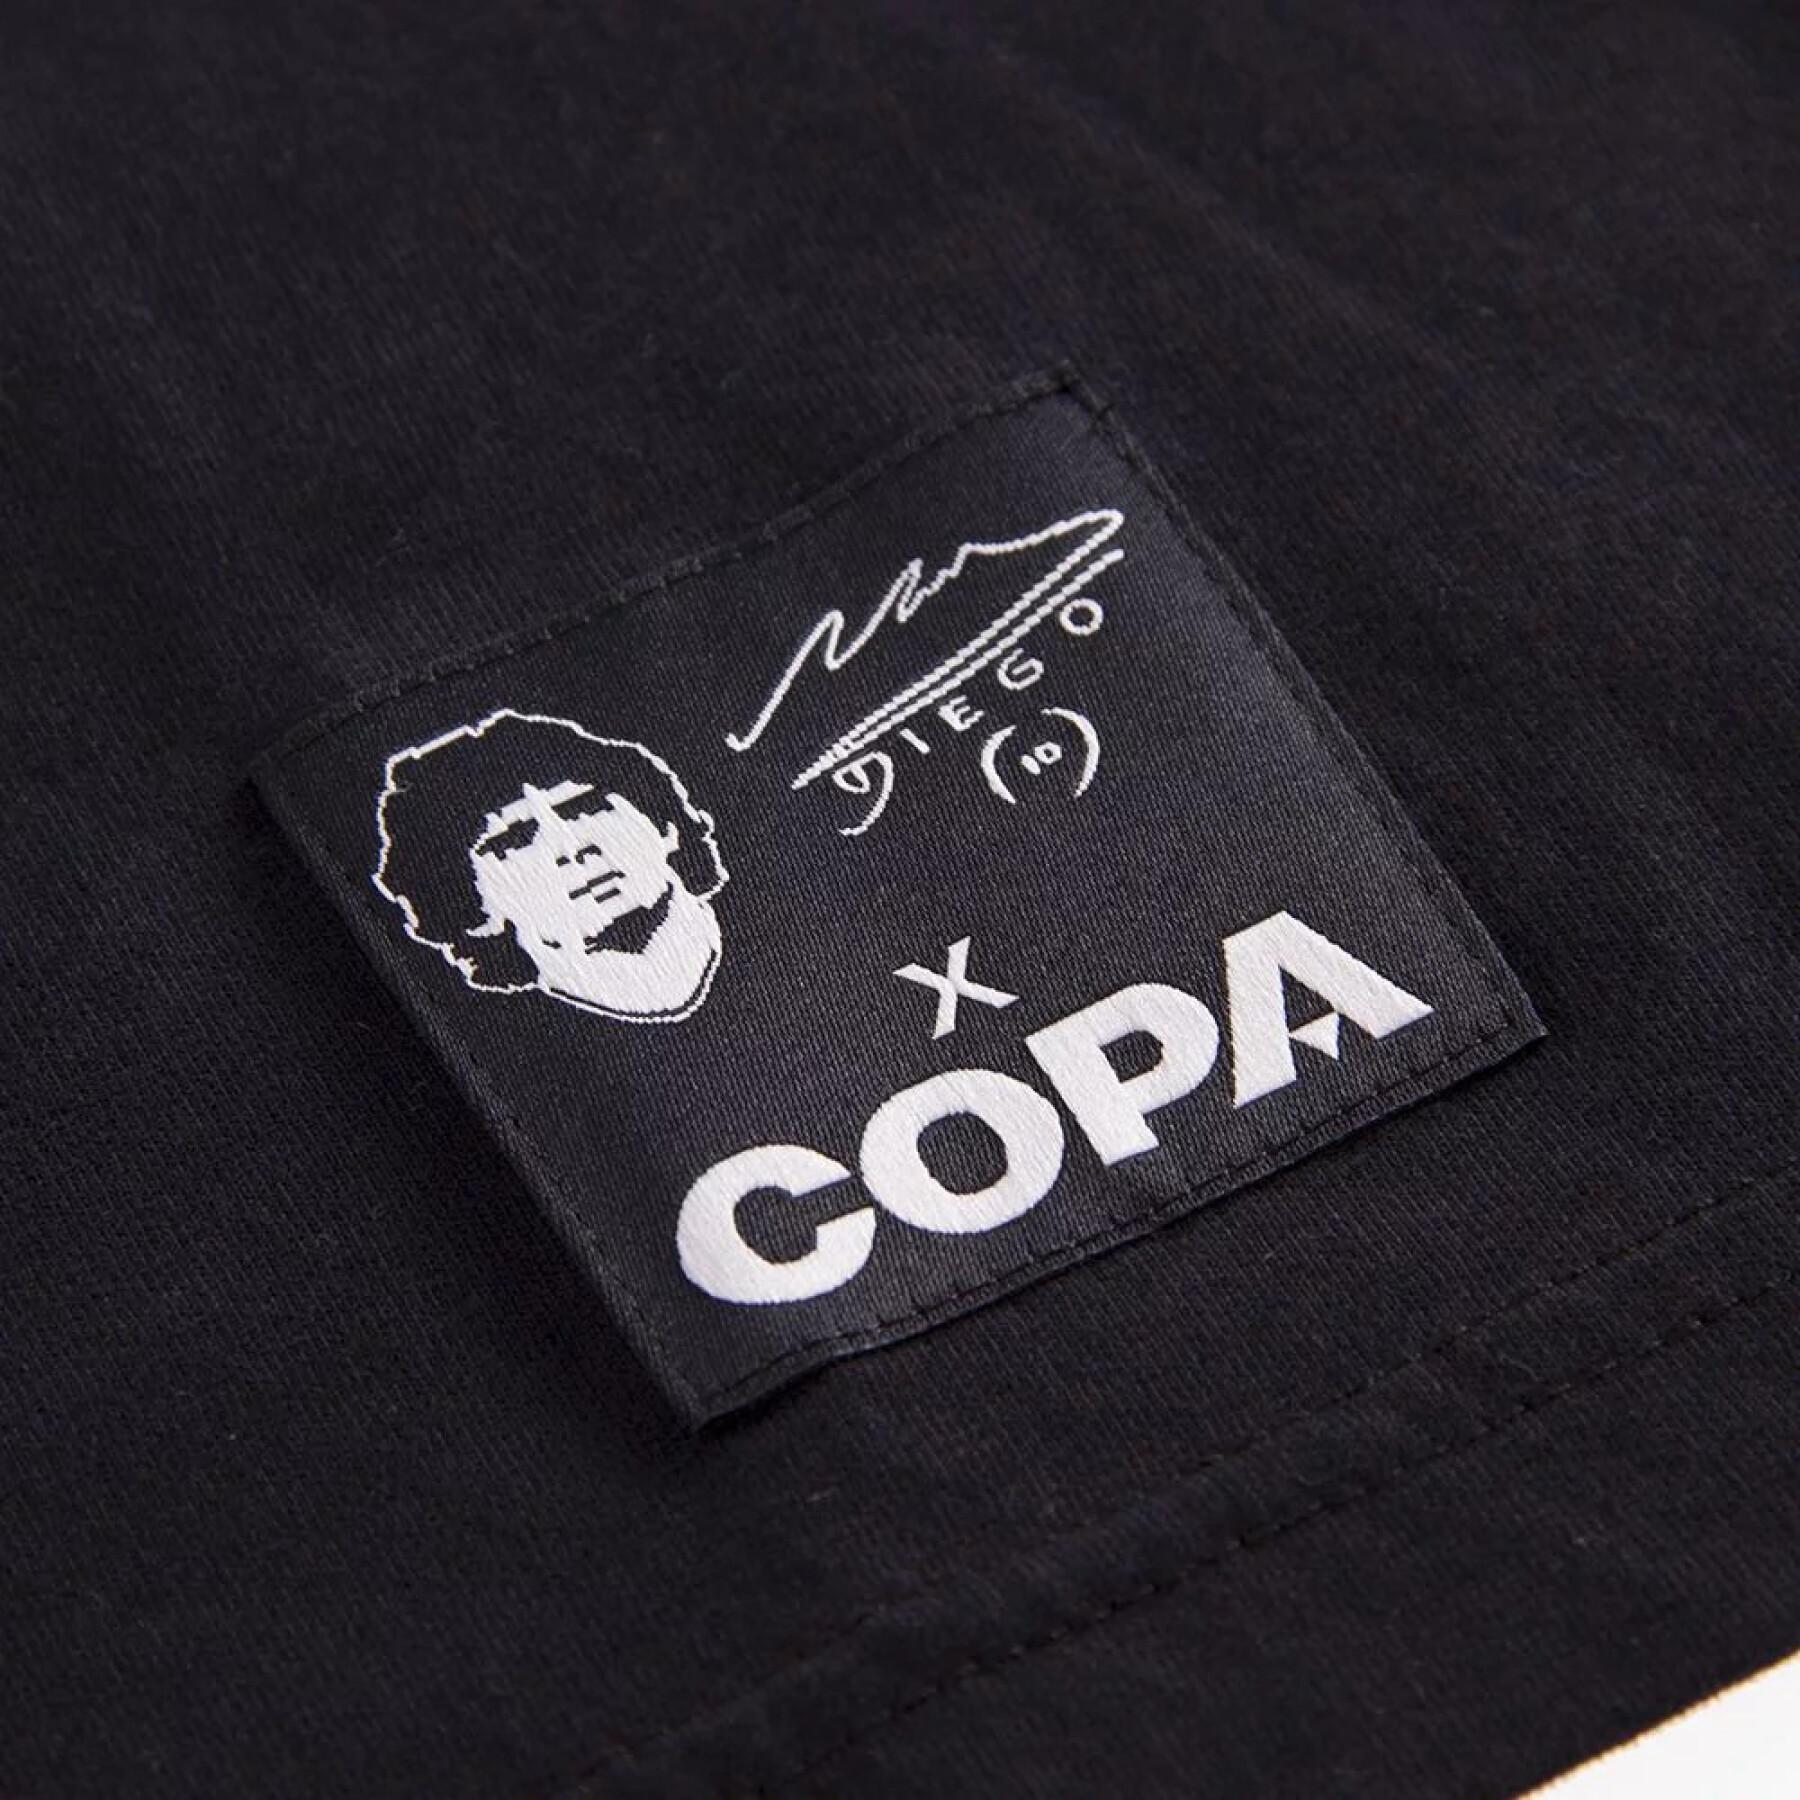 Maglietta Copa Football Maradona World Cup 1986